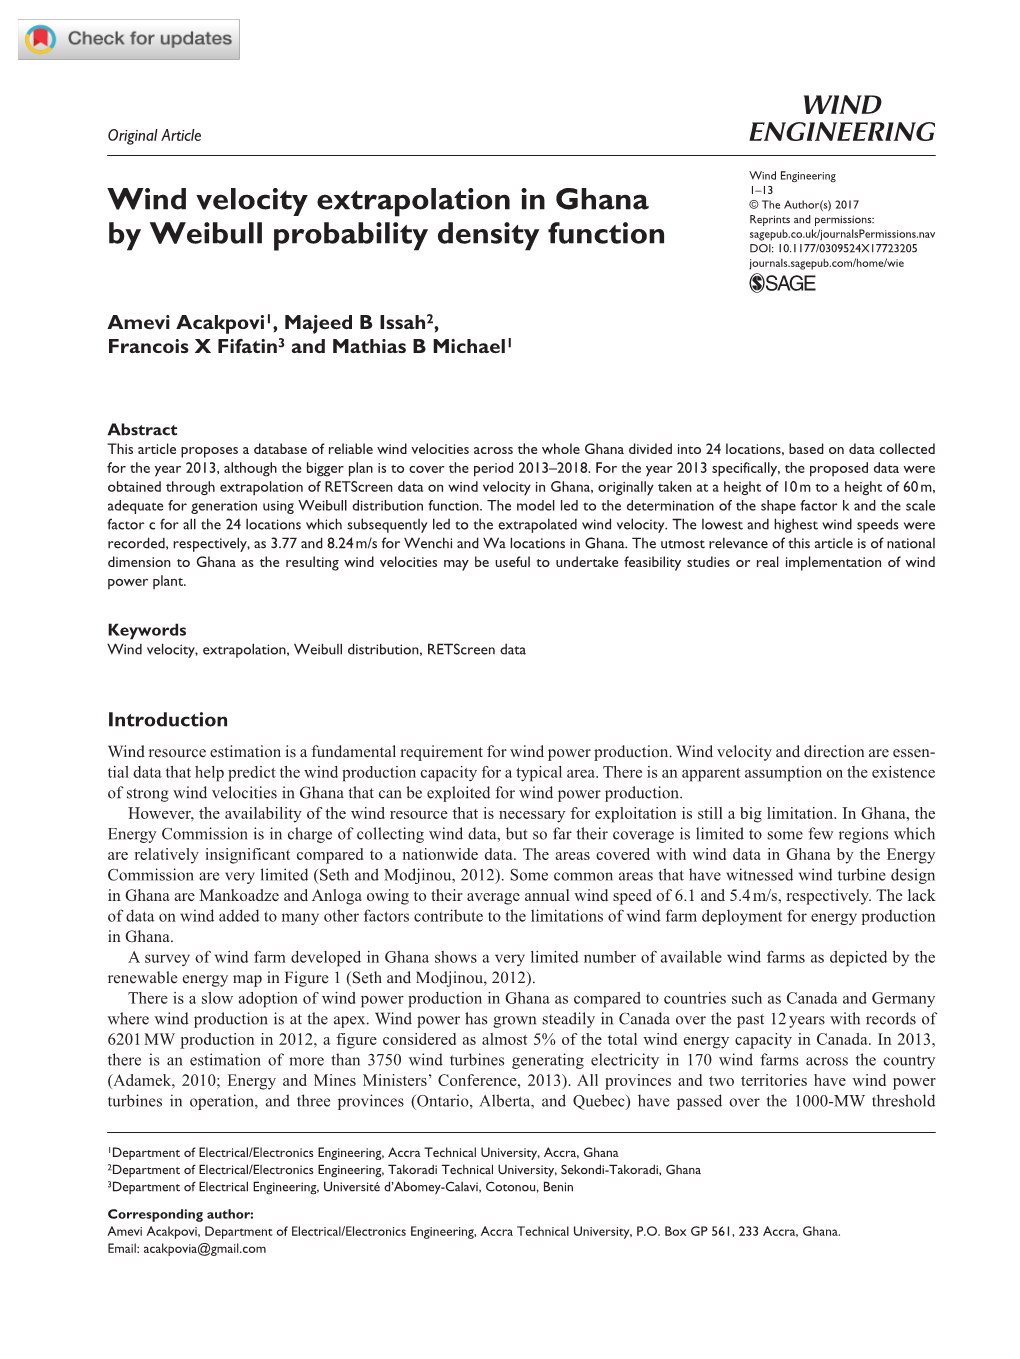 Wind Velocity Extrapolation in Ghana by Weibull Probability Density Function